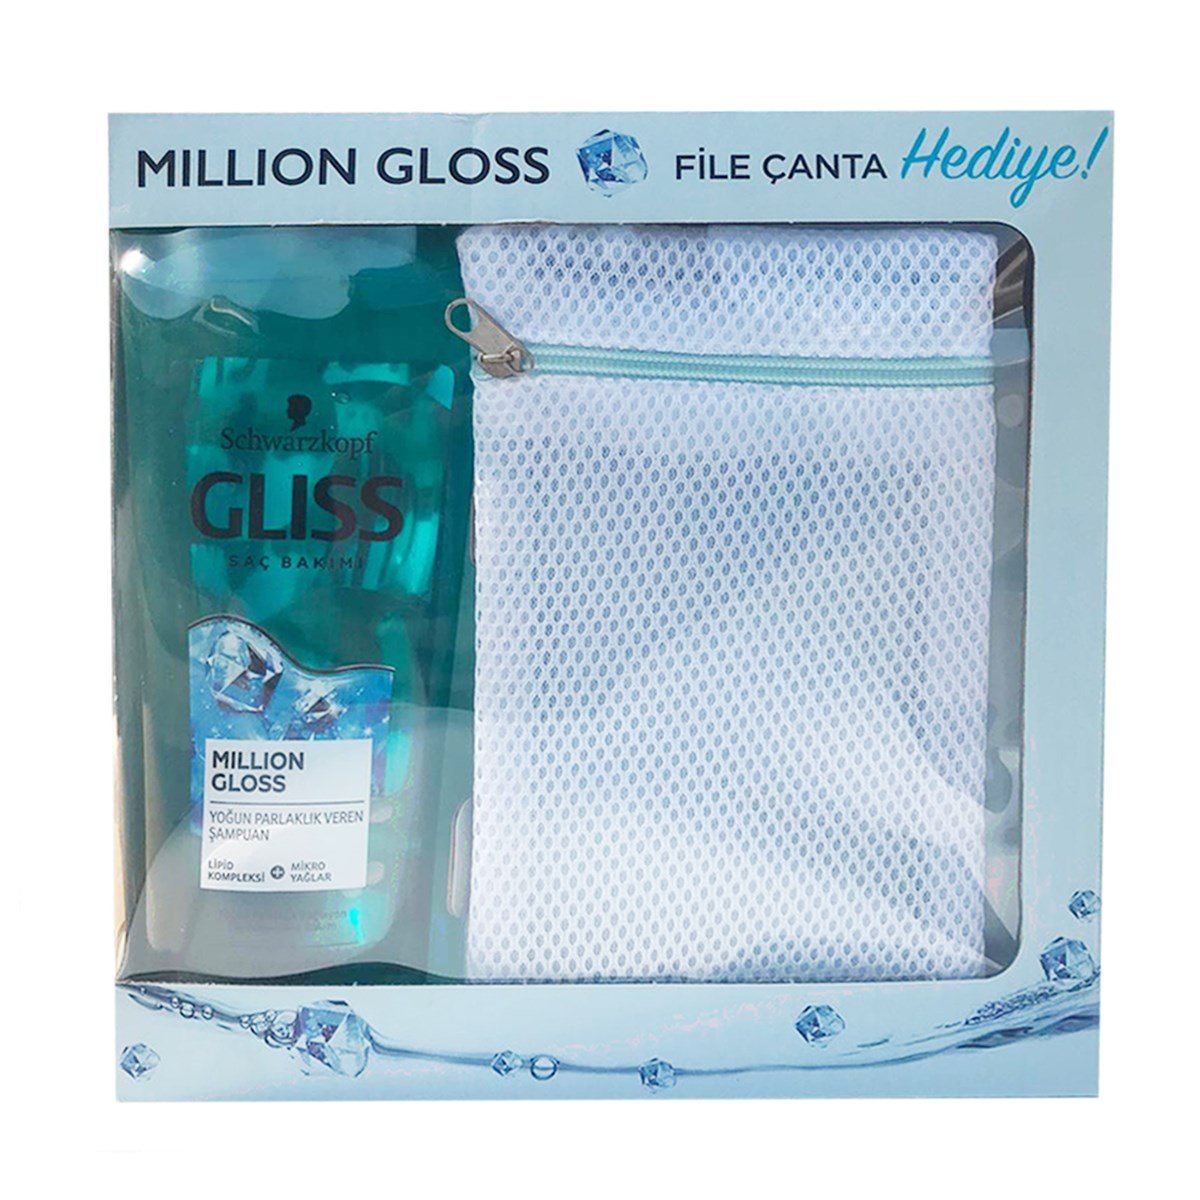 Gliss Şampuan Million Gliss Yoğun Parlaklık 500 ml + File Çanta Hediyeli -  Platin